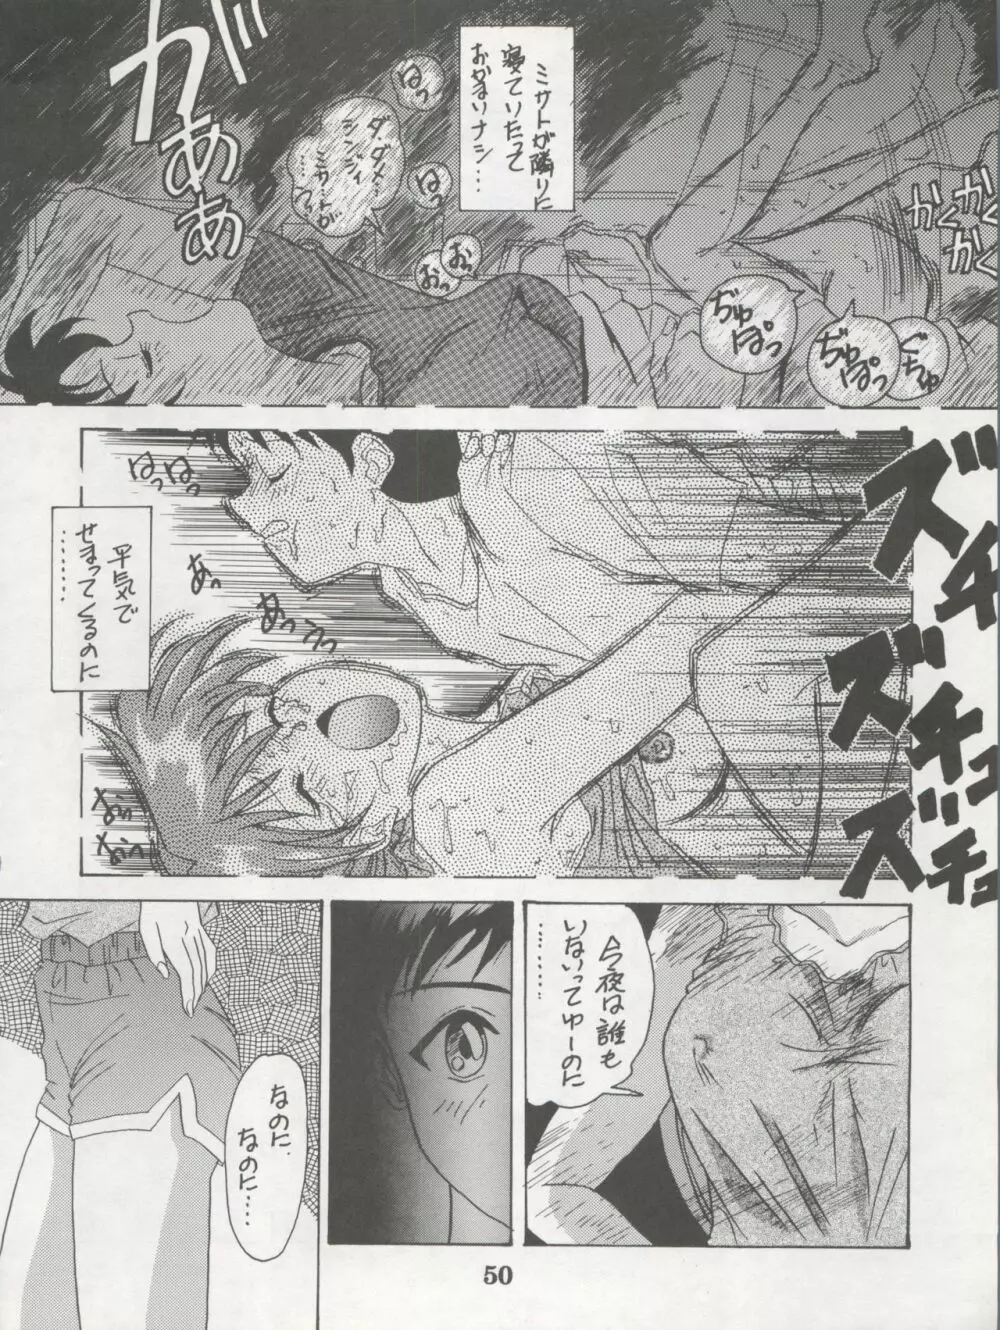 1998 SUMMER 電撃犬王 - page52